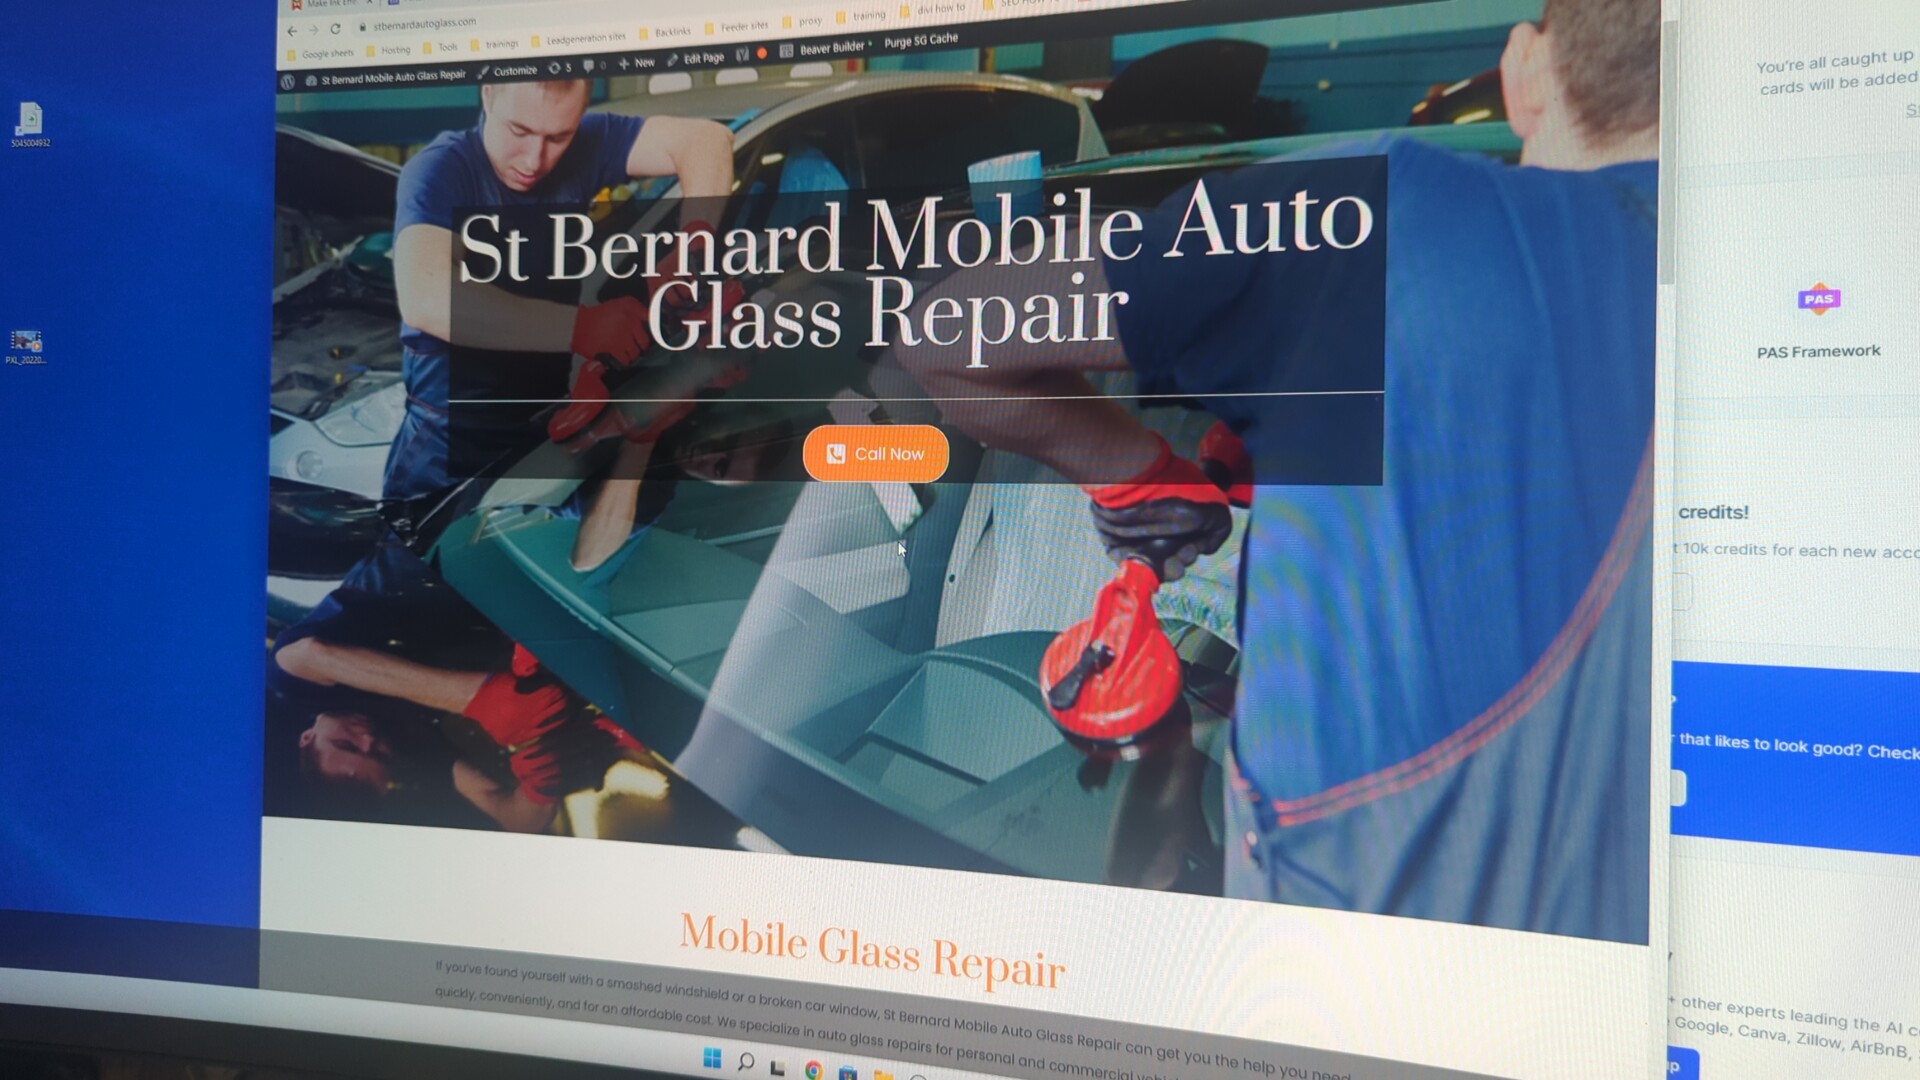 St Bernard Mobile Auto Glass Repair